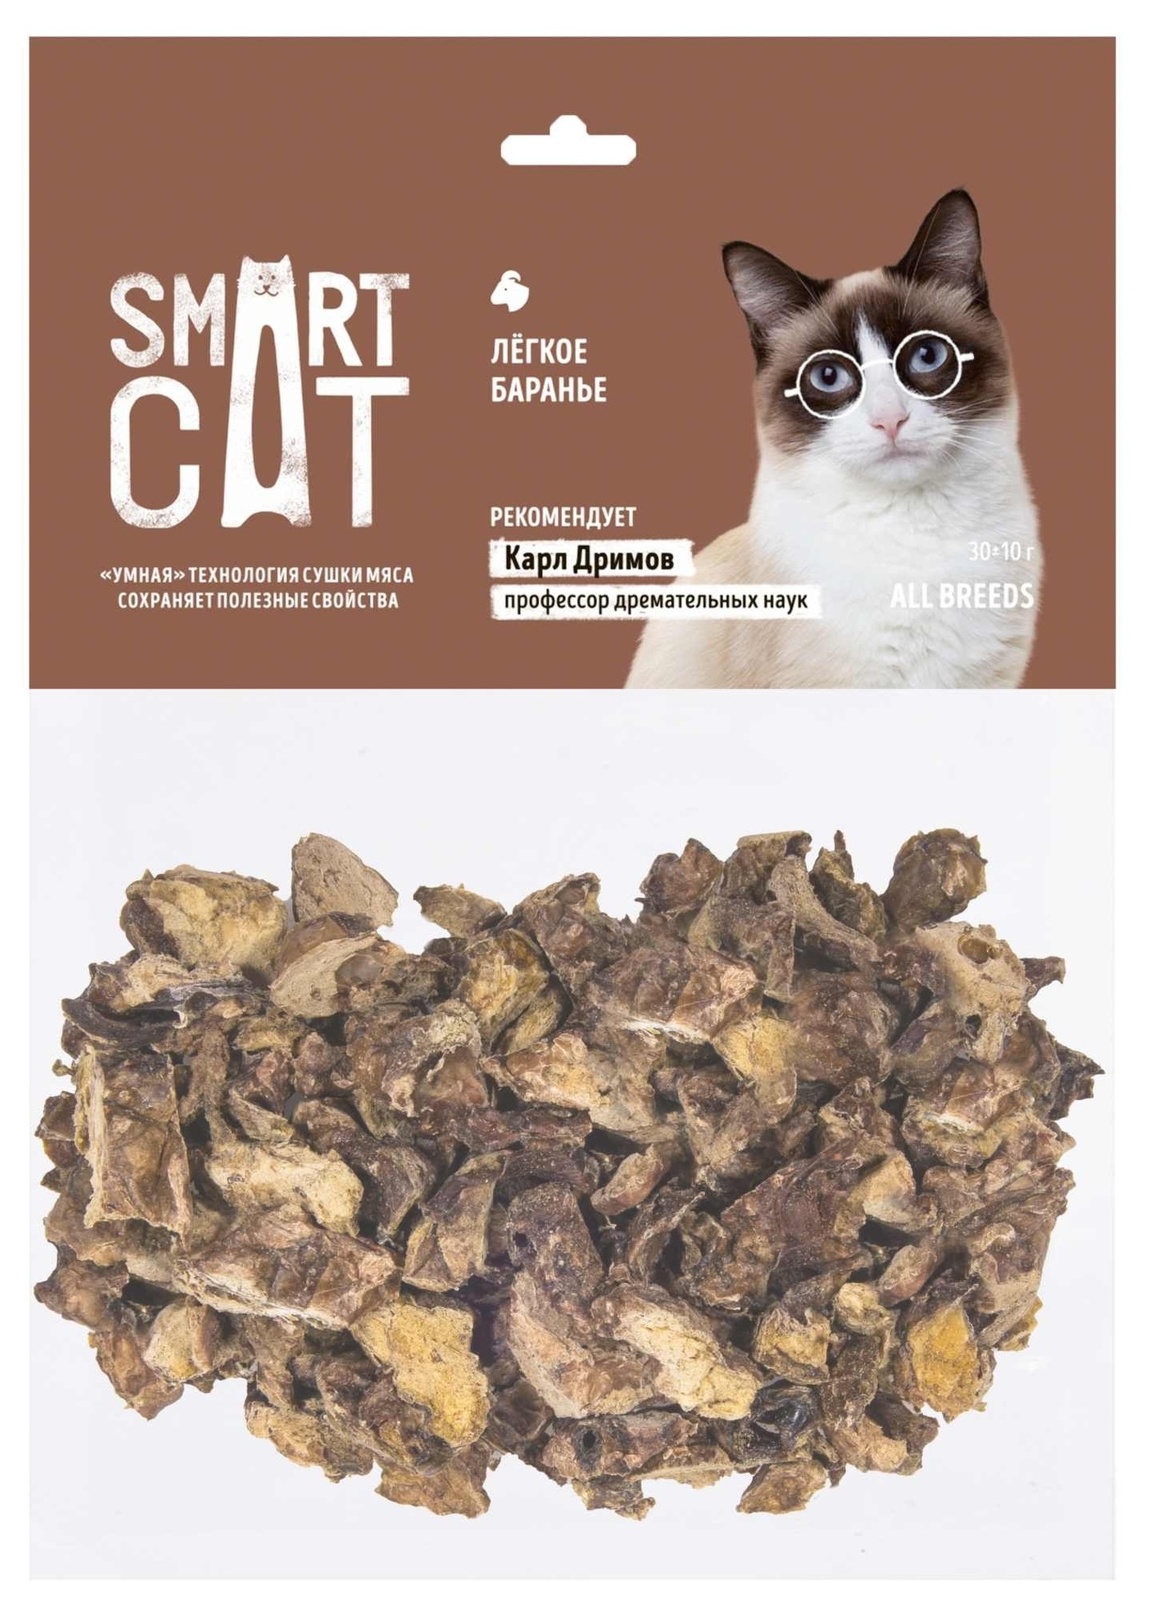 Smart Cat лакомства Smart Cat лакомства легкое баранье (30 г) smart cat лакомства smart cat лакомства легкое баранье 30 г